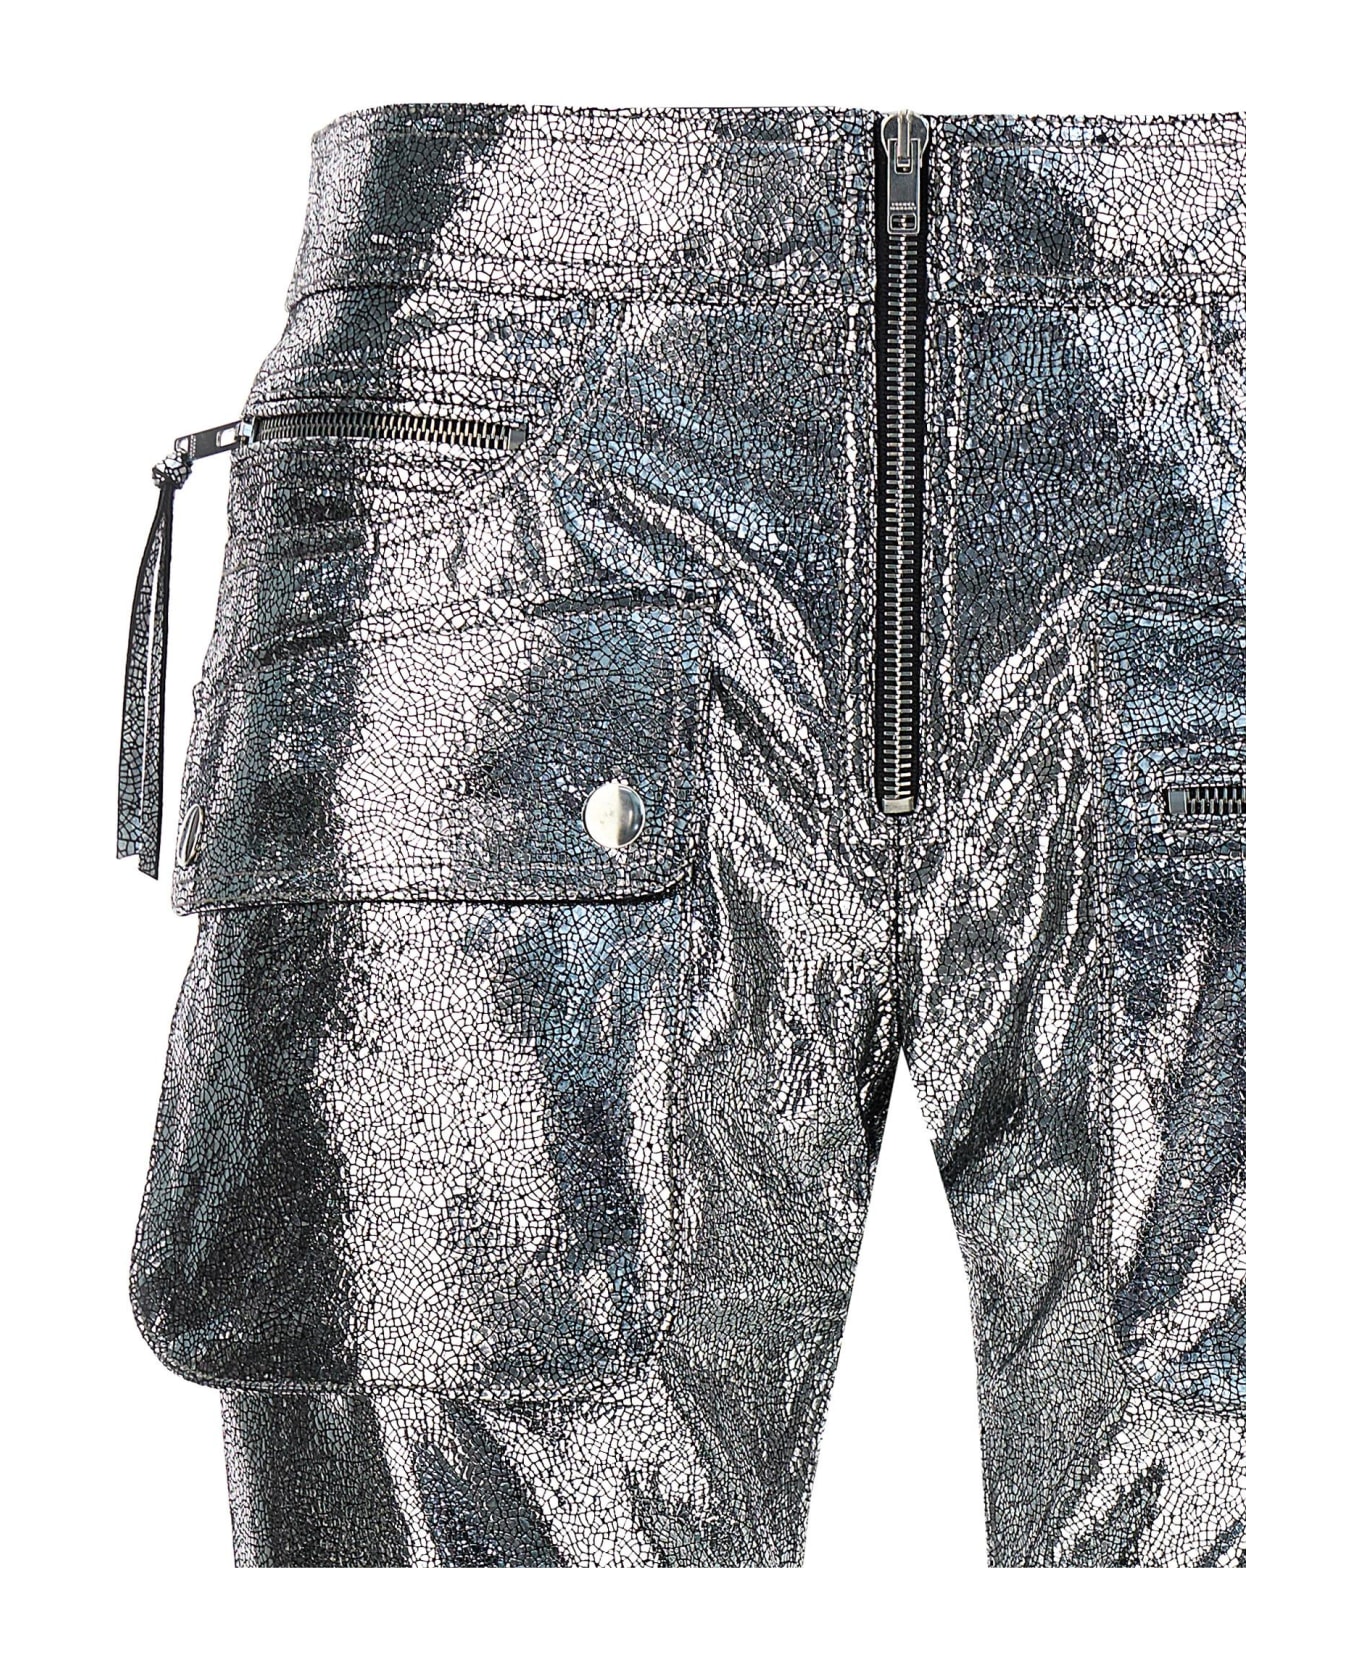 Isabel Marant Ciane' Pants - Silver